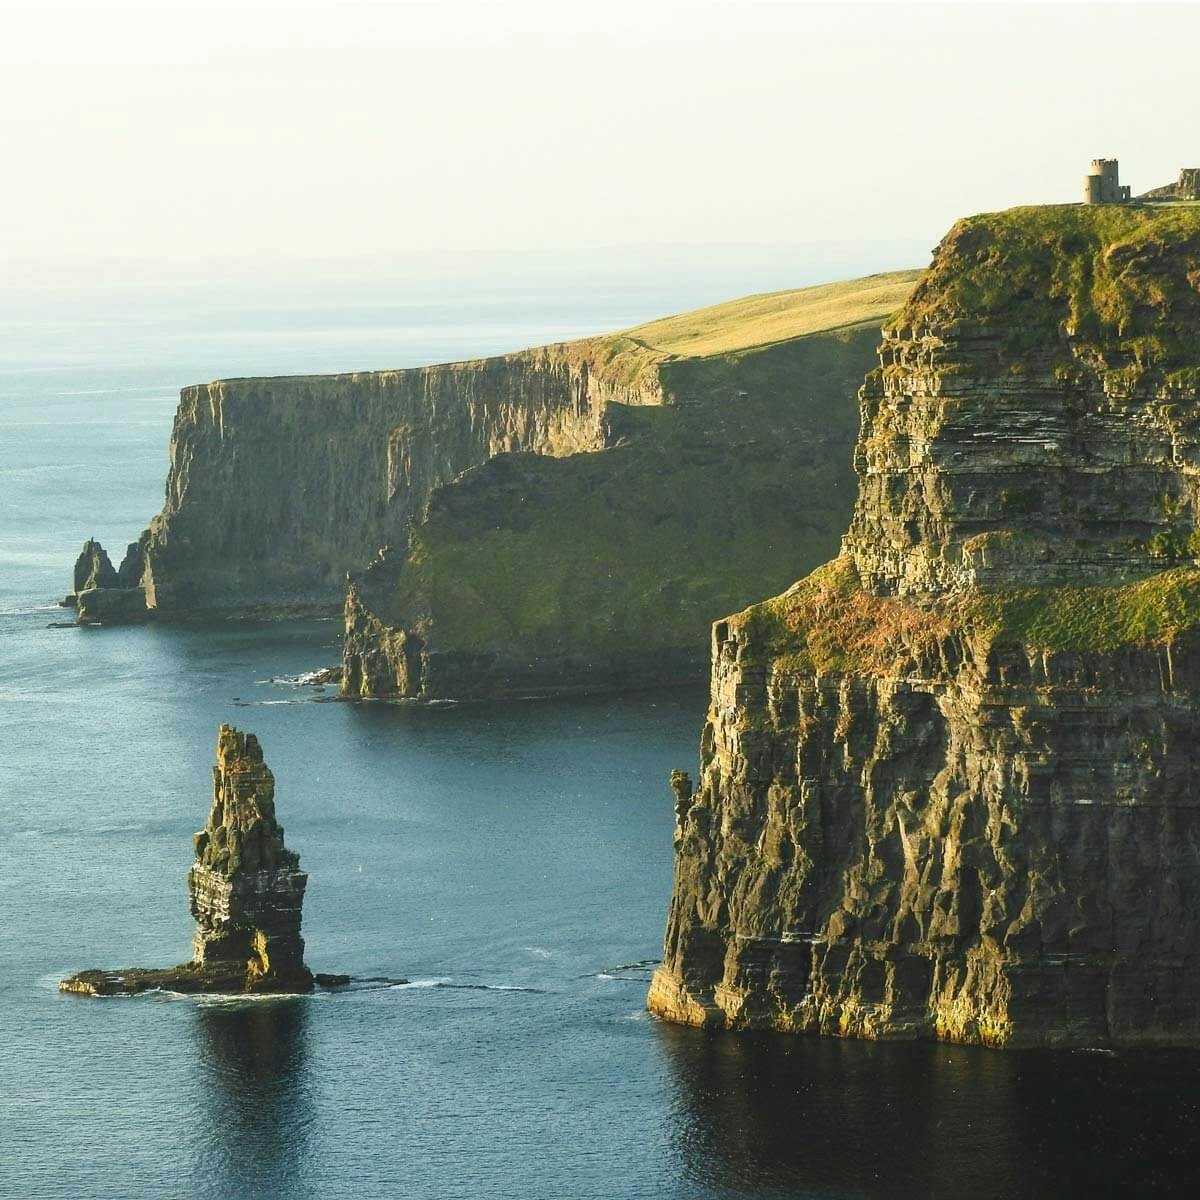 Cliffs on the Irish coastline